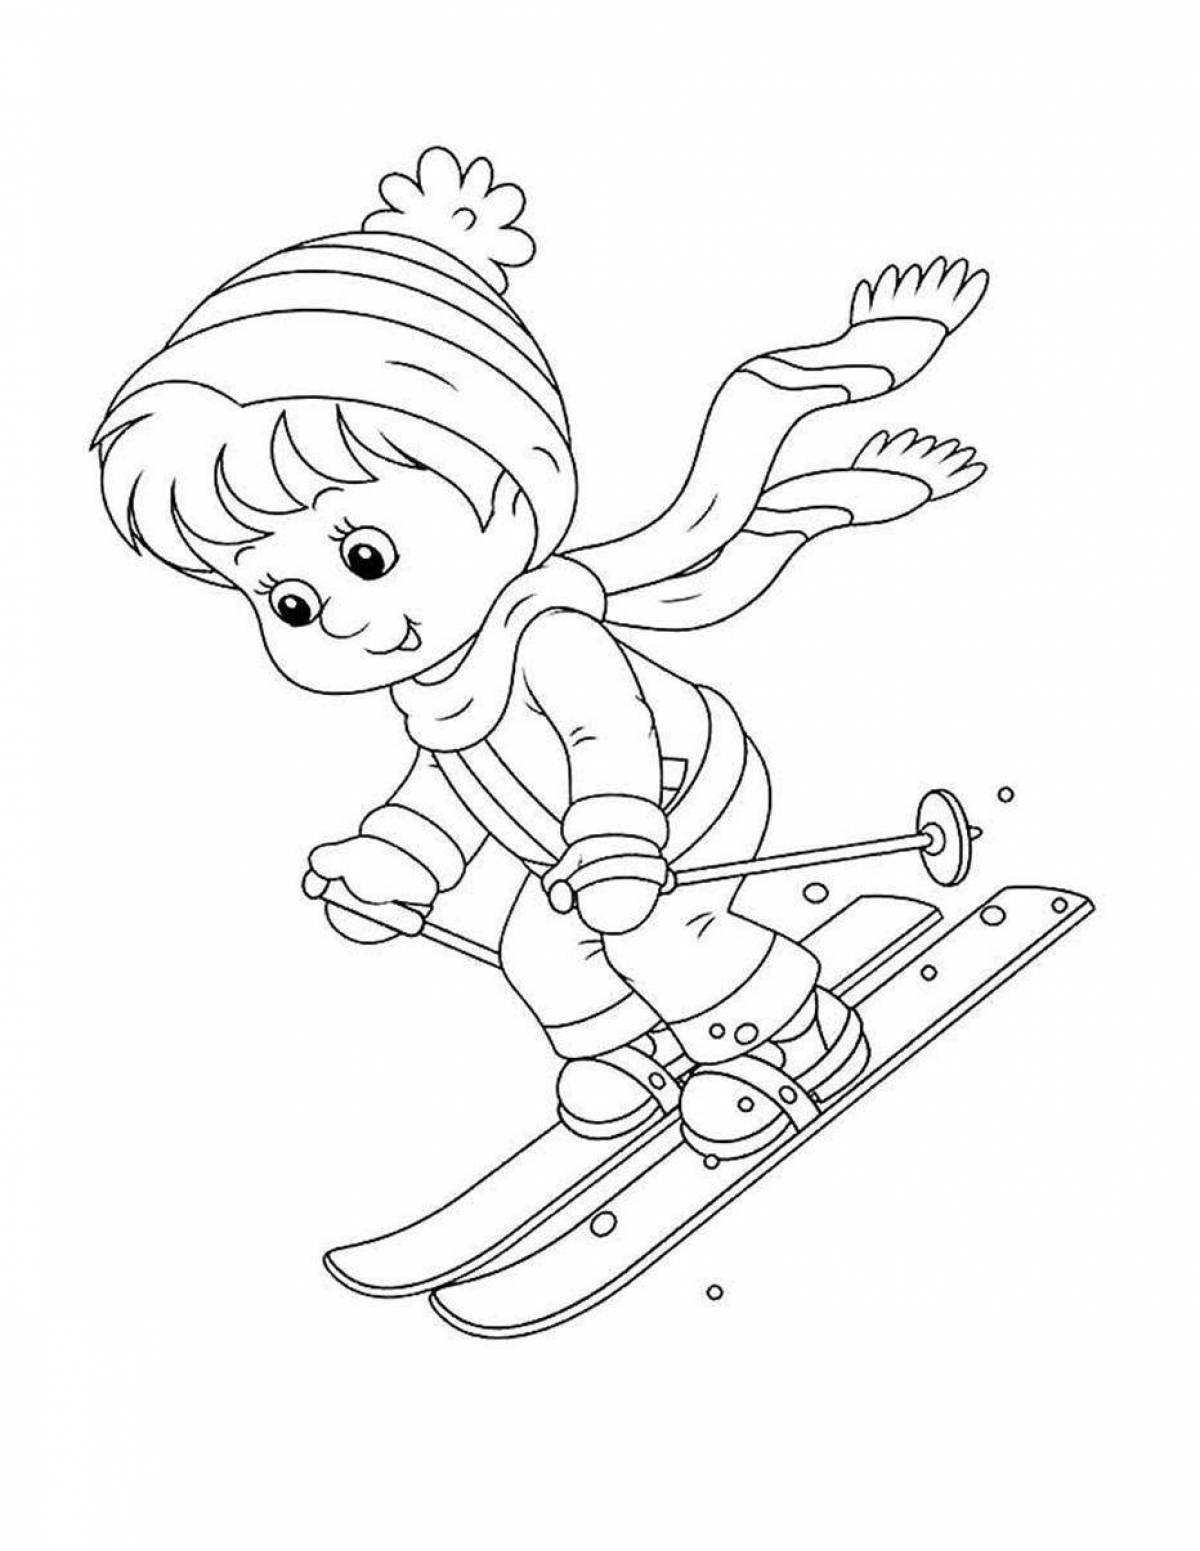 Playful image of winter sports for children in kindergarten